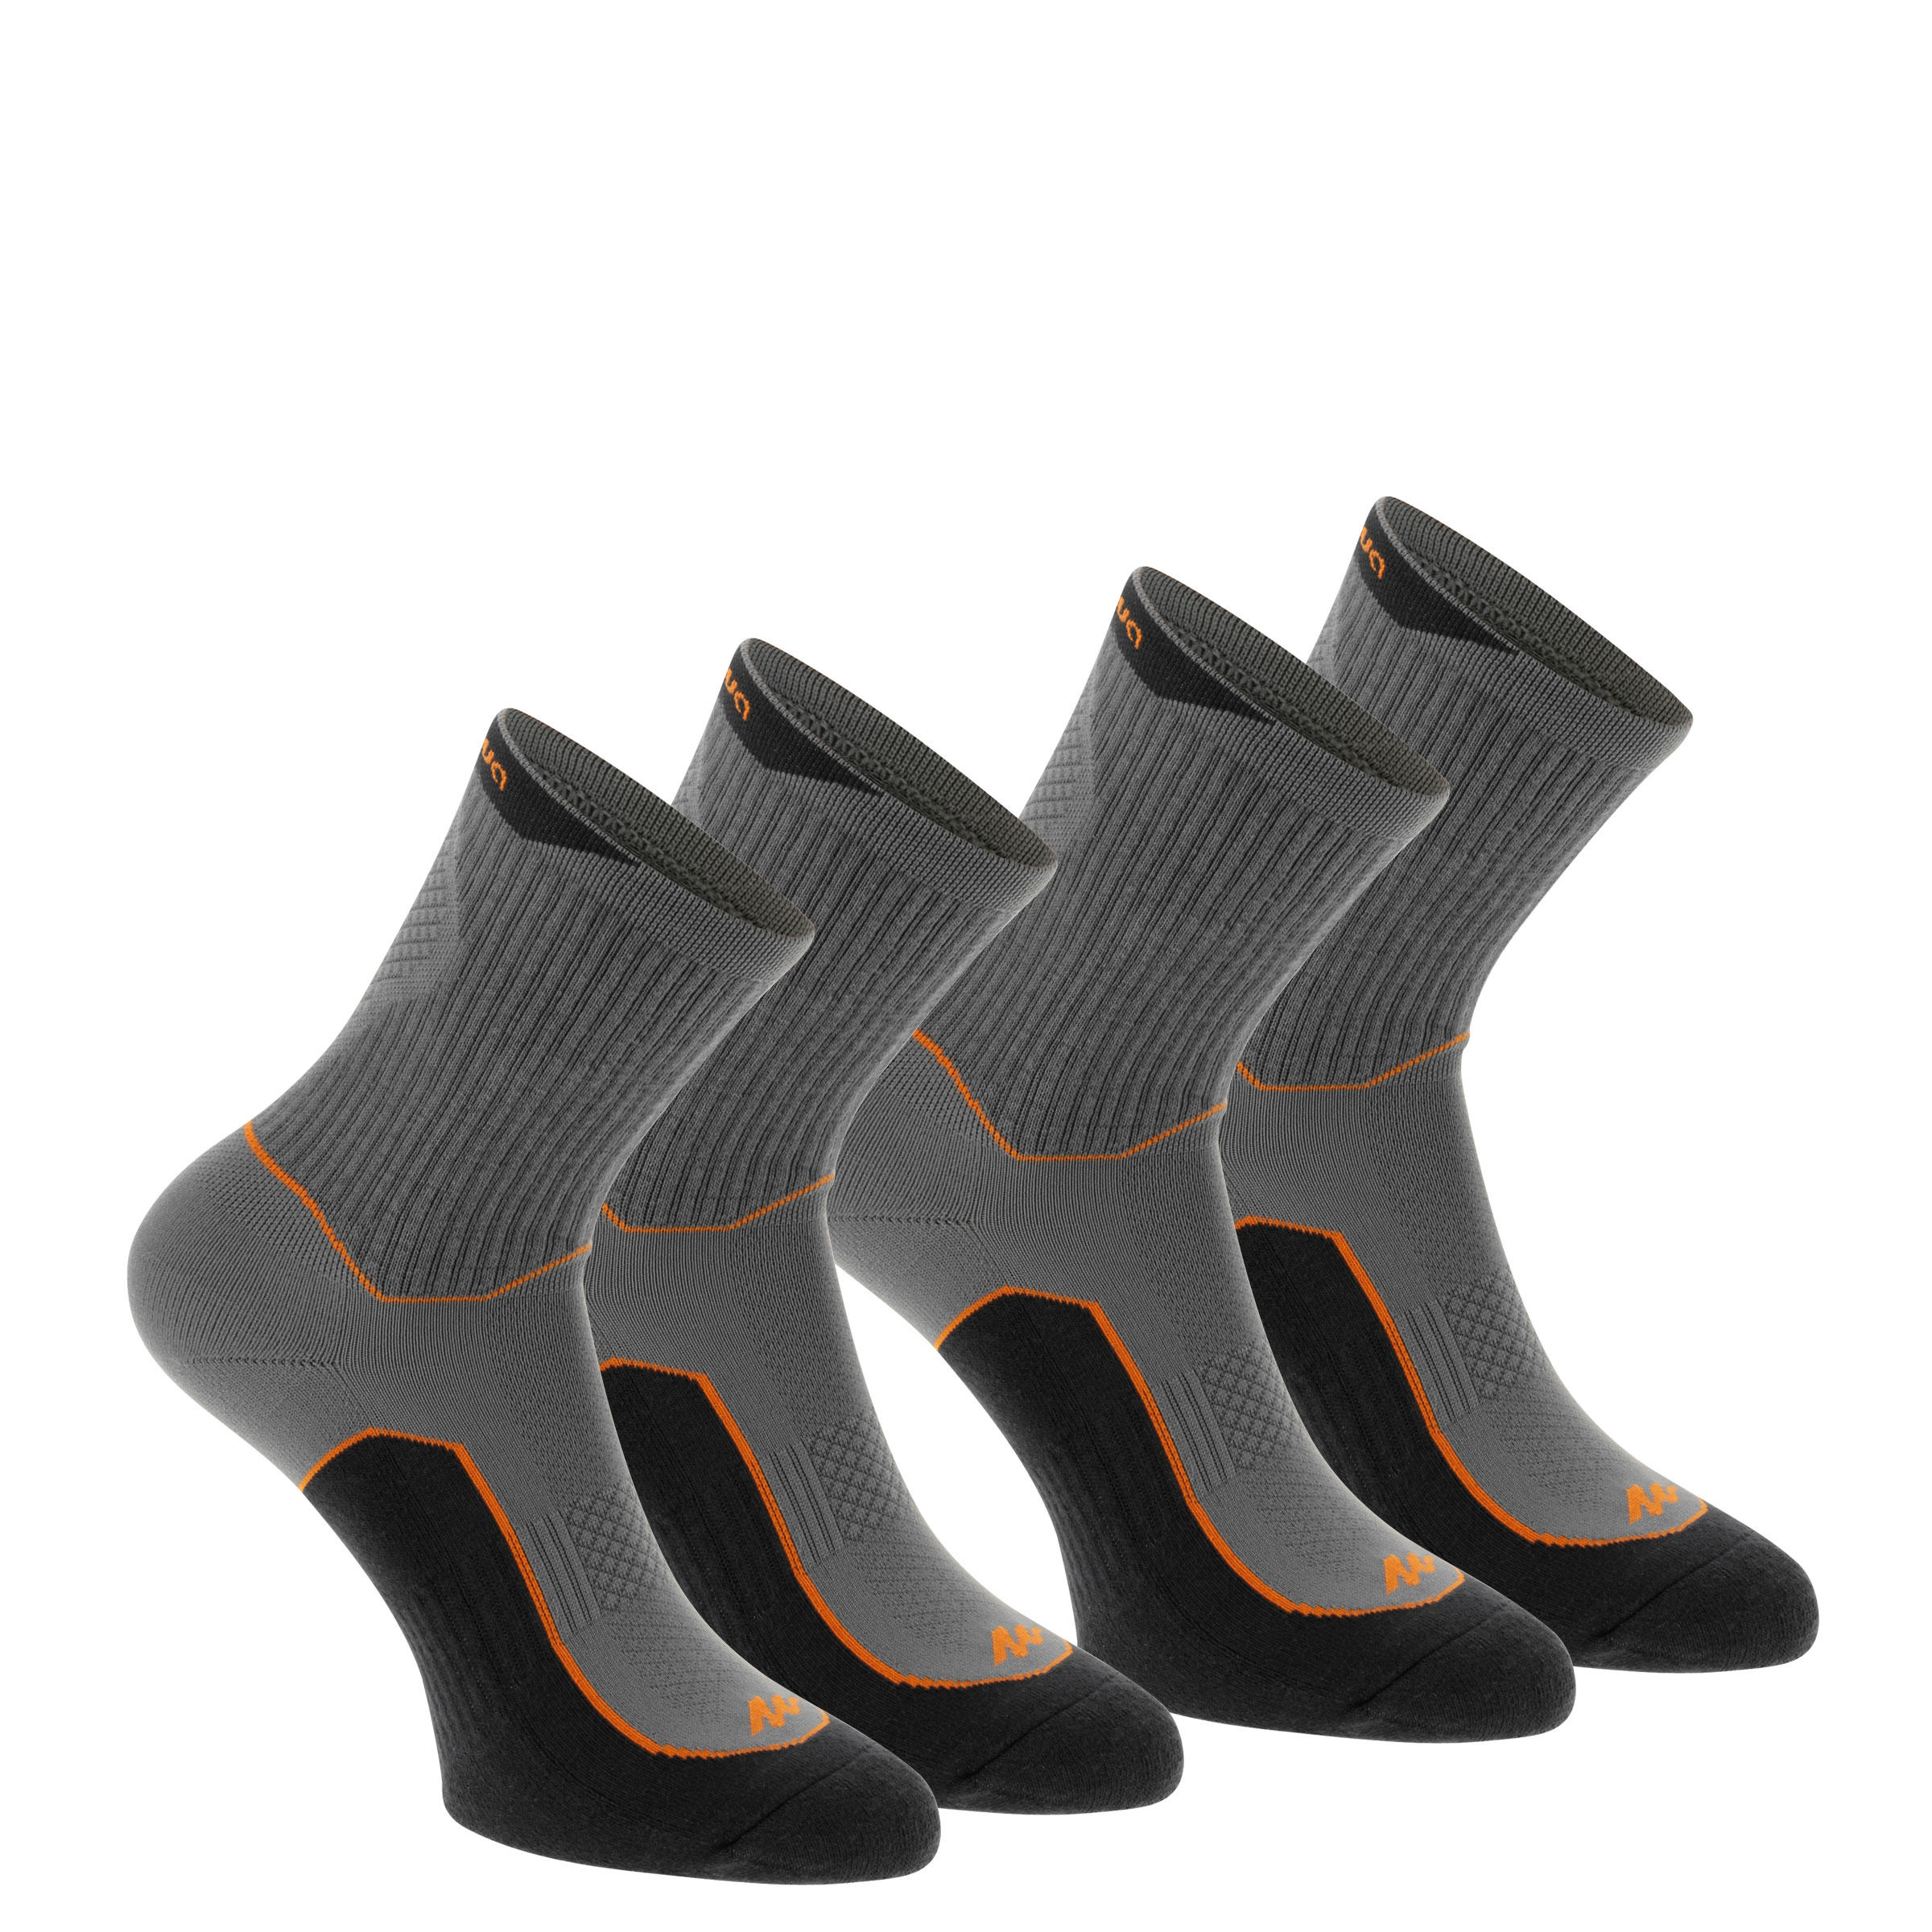 QUECHUA Arpenaz 100 Adult High Top Nature Hiking Socks 2 pairs - Grey